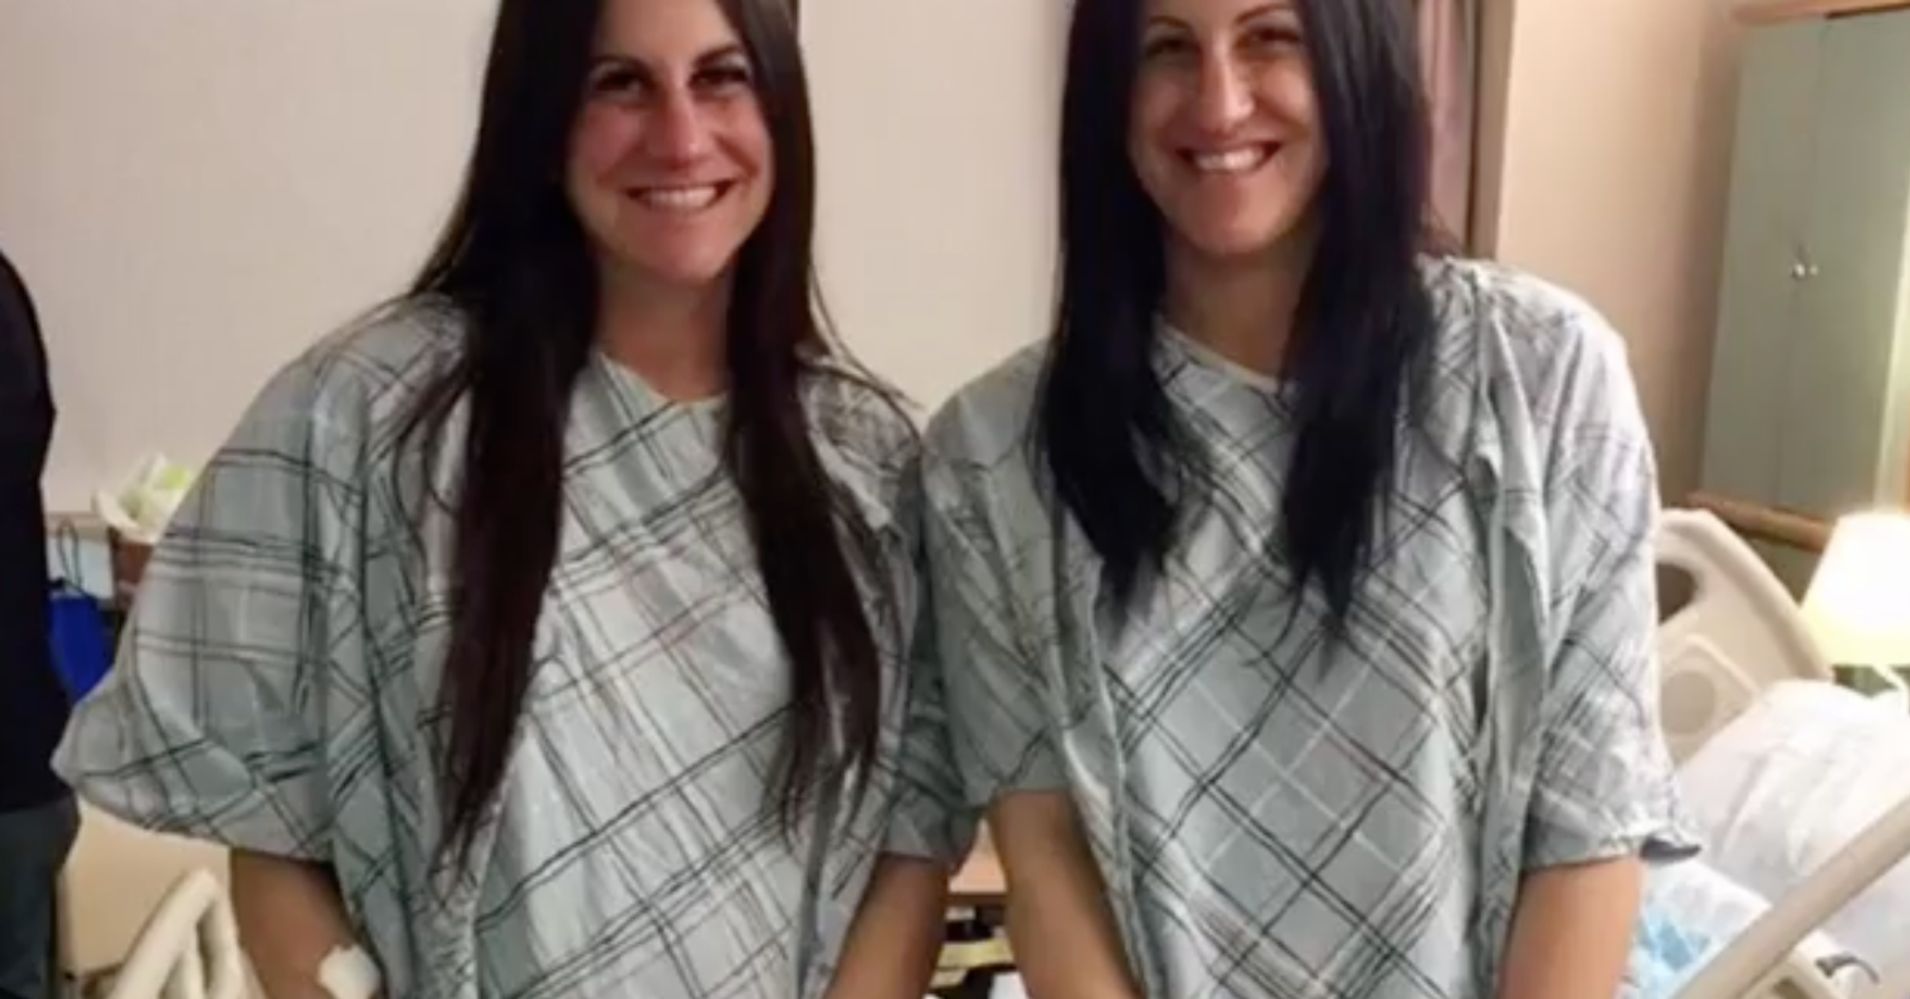 Twin Sisters Both Give Birth On Same Day 1 Room Apart Huffpost